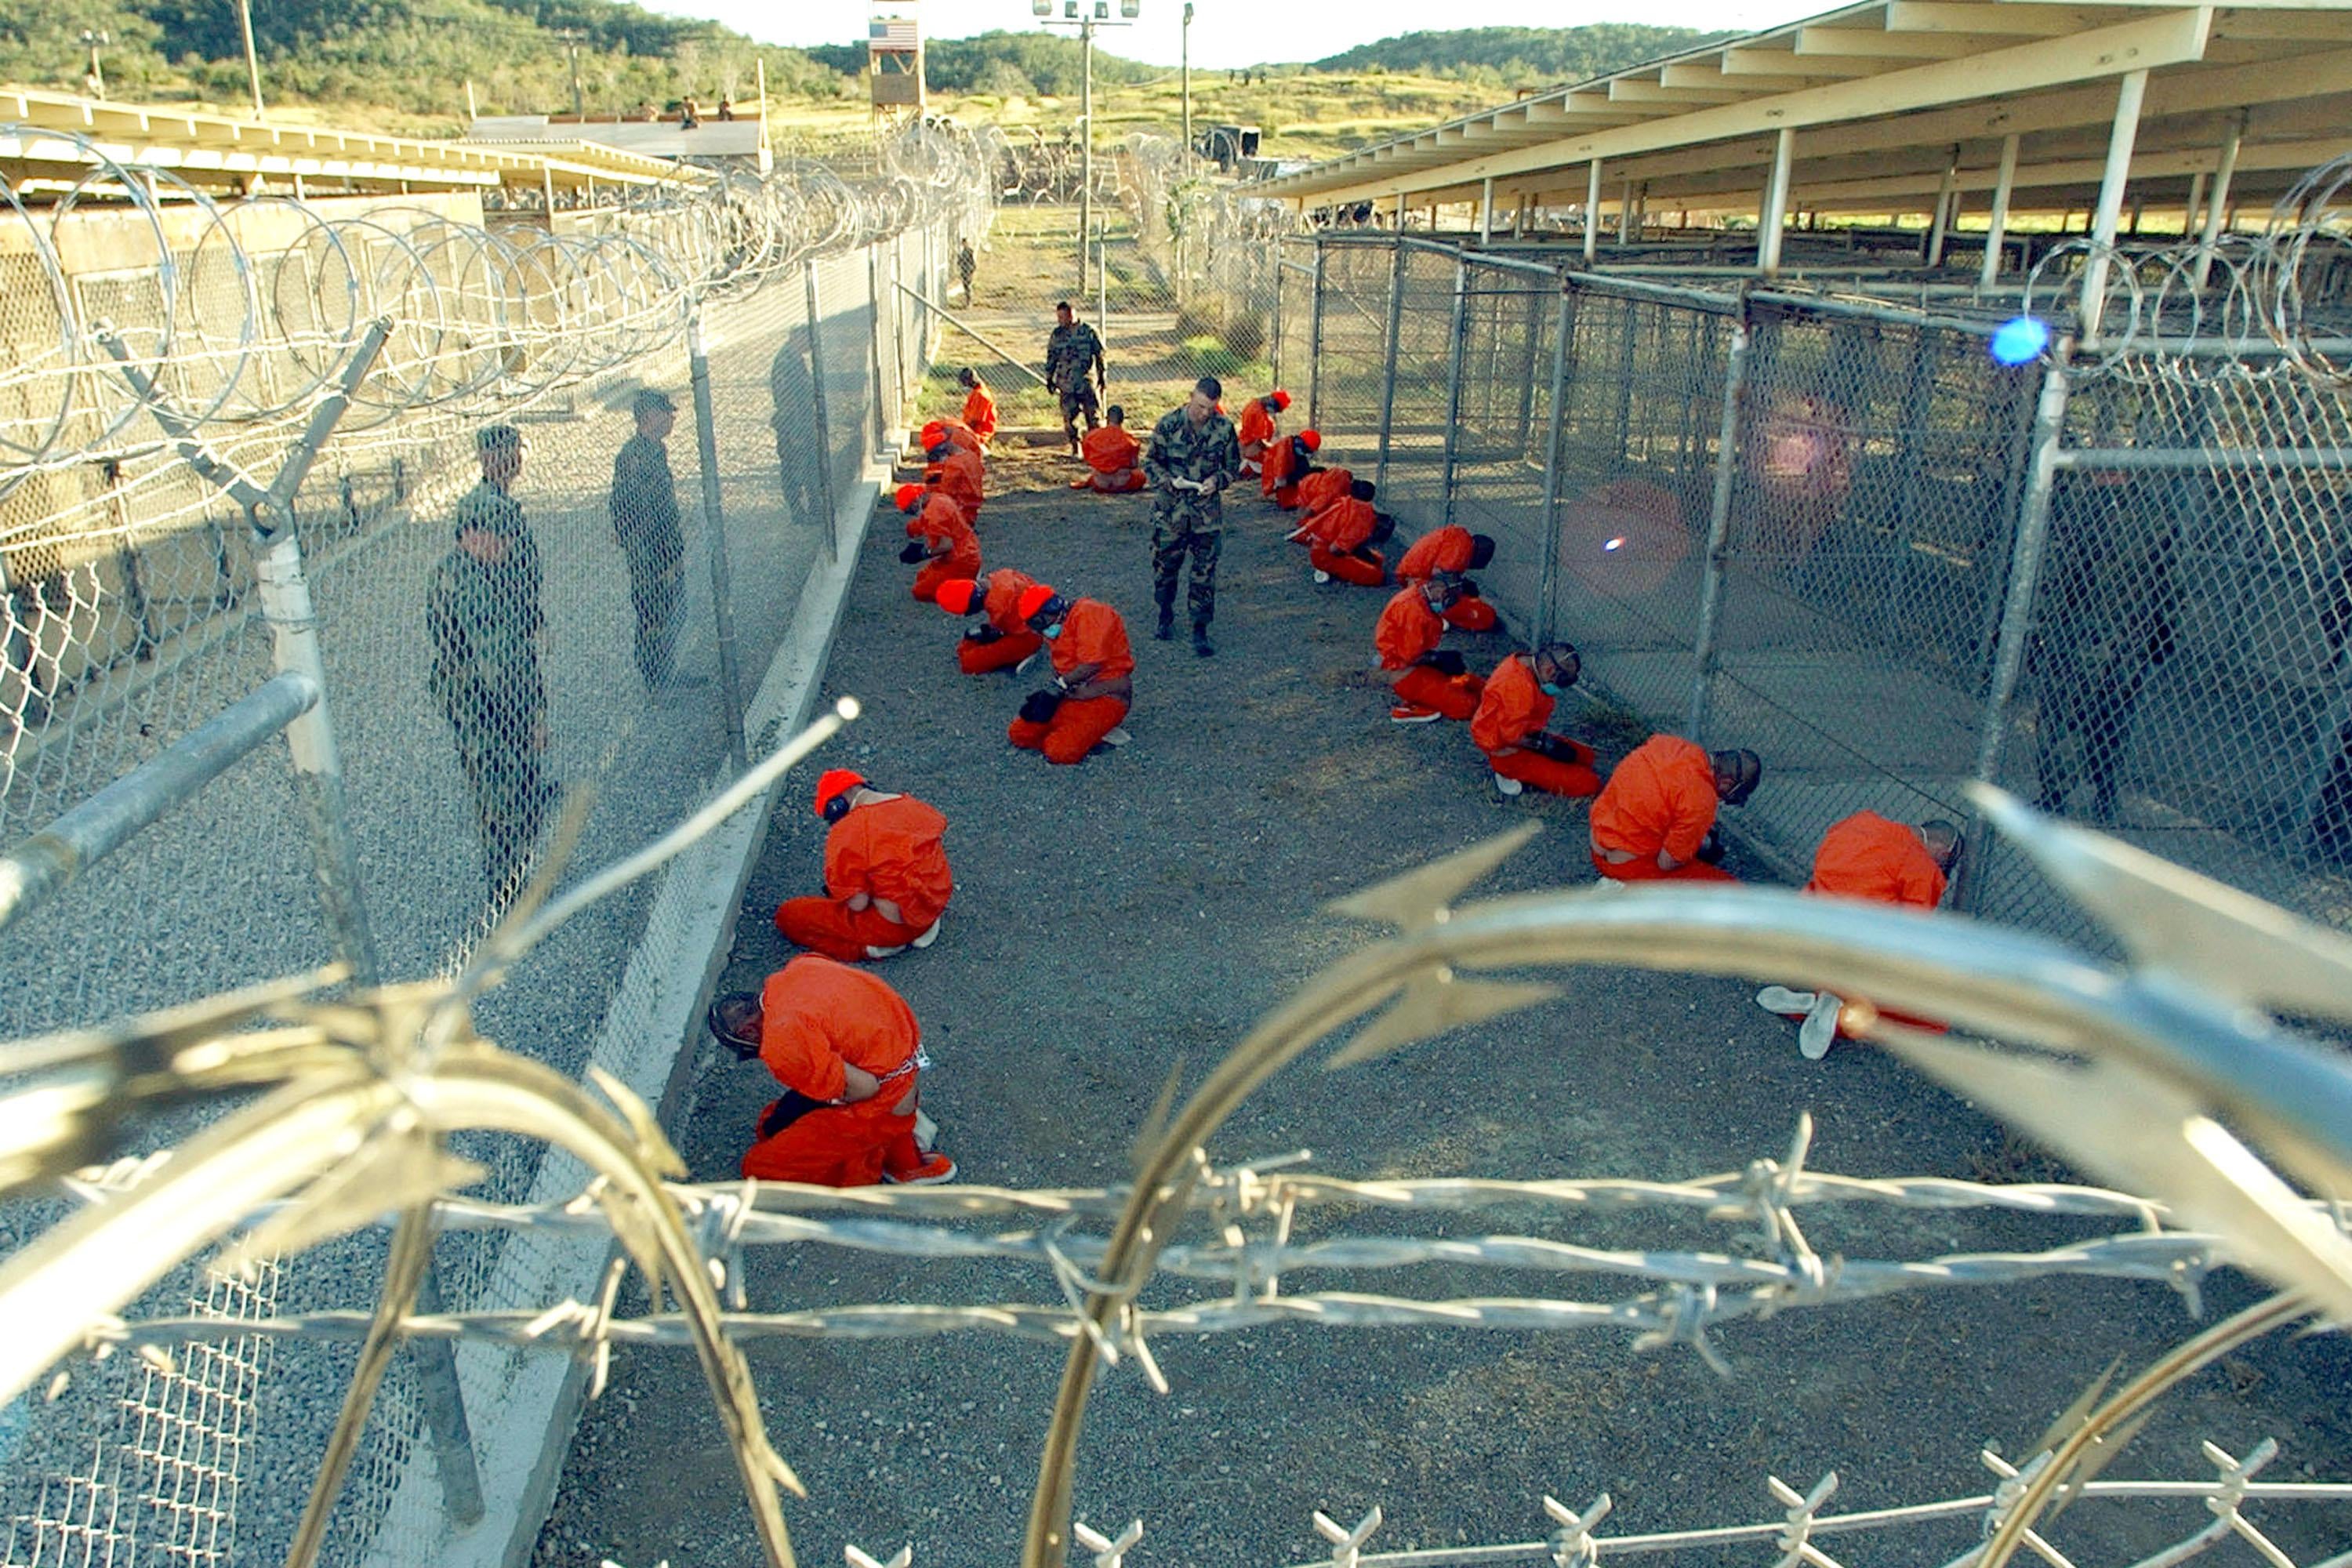 Men in orange jumpsuits kneel in an enclosed area.